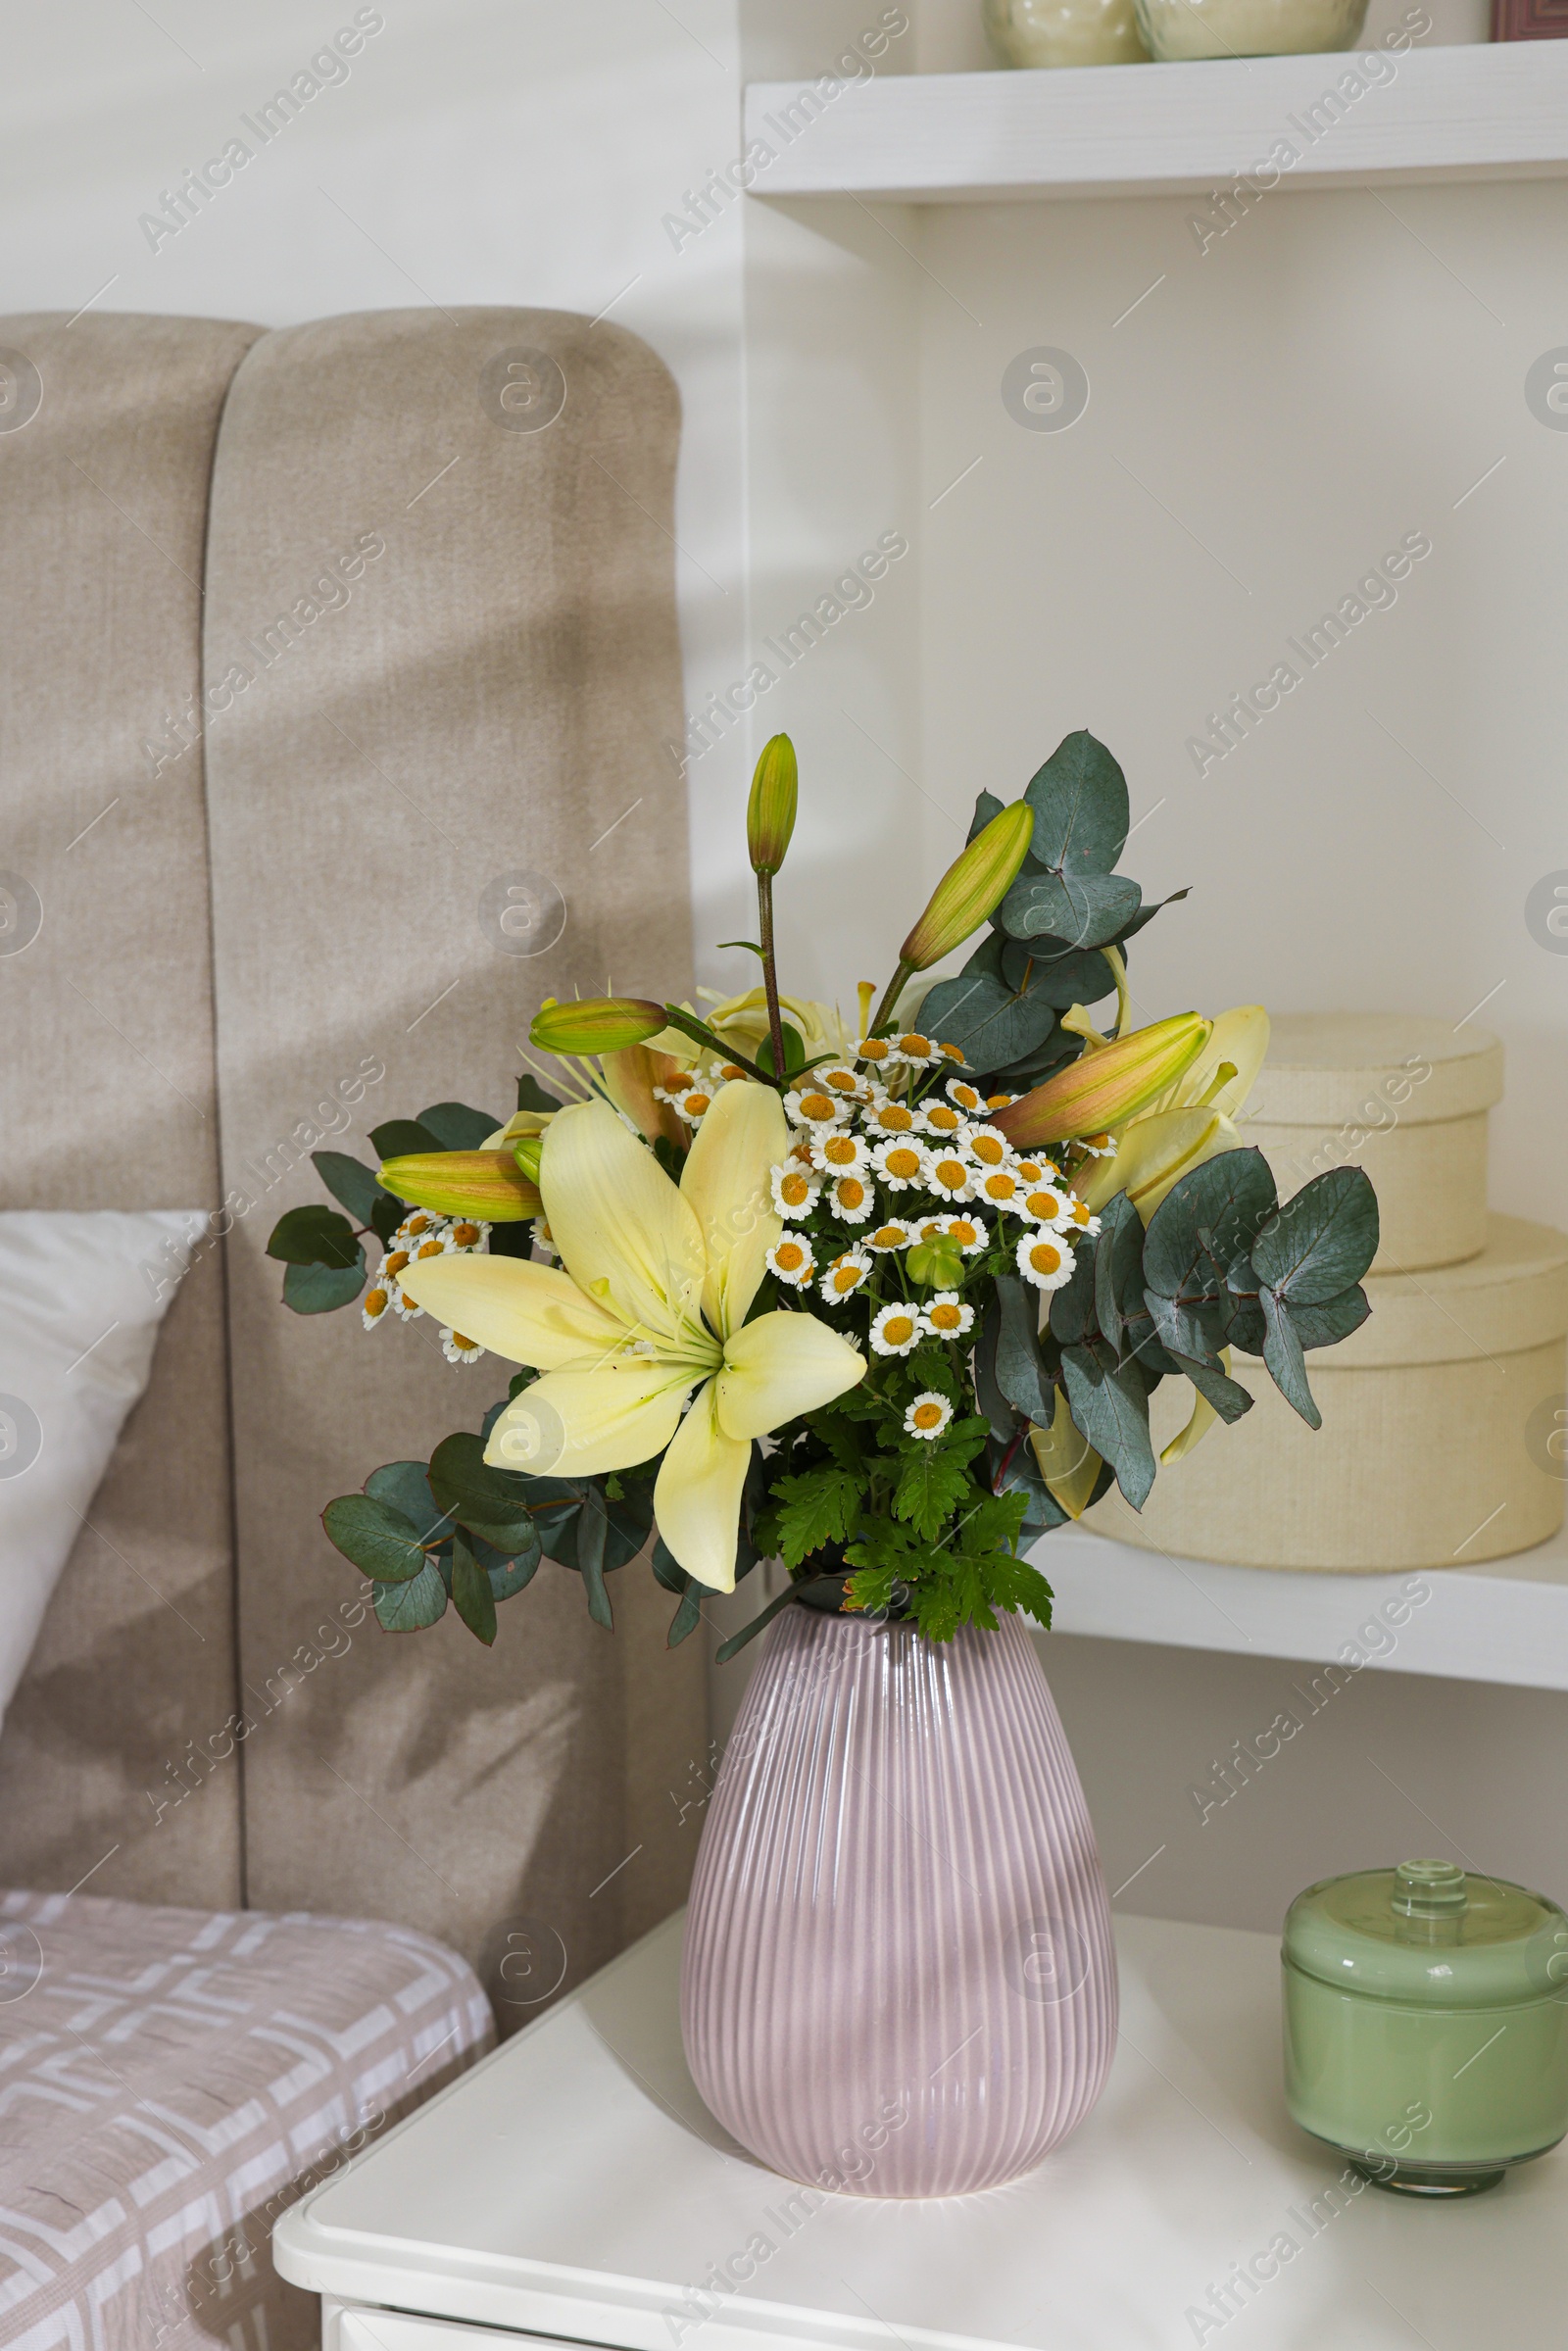 Photo of Bouquet of beautiful flowers on nightstand in bedroom